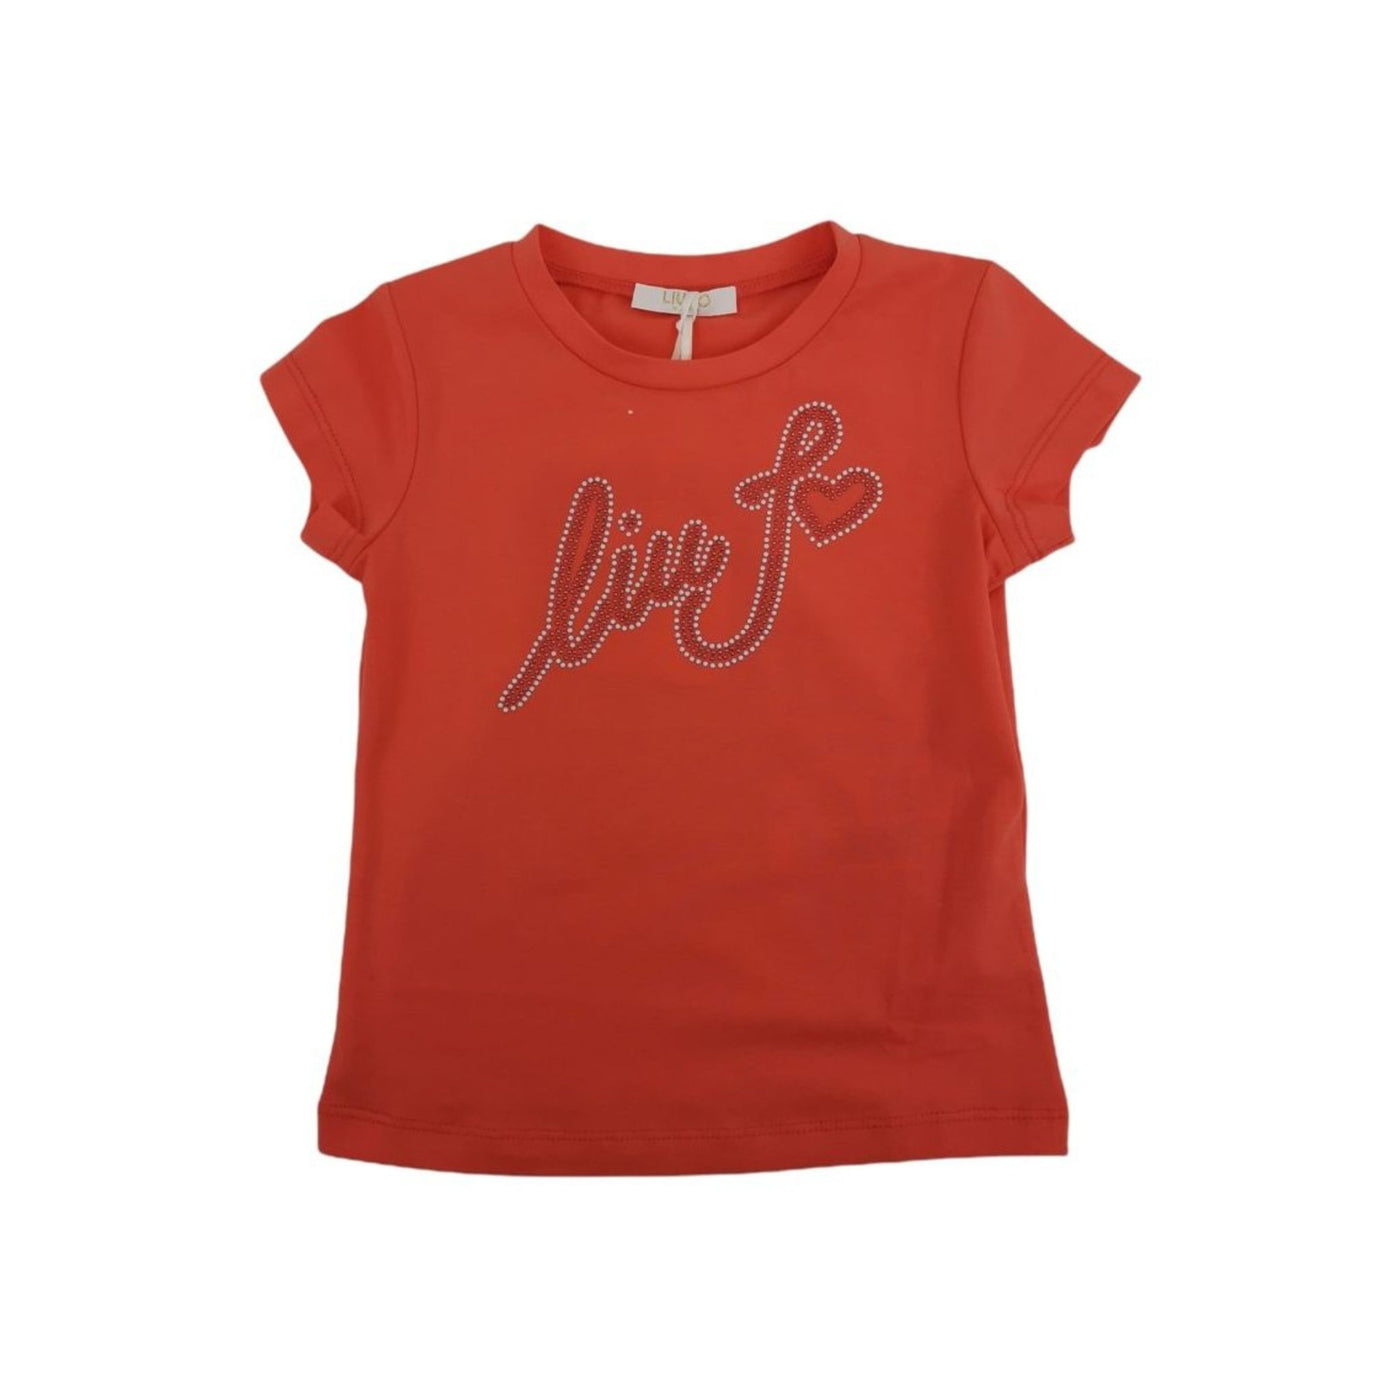 T-shirt Bambina in cotone tinta unita con maniche corte e scollatura girocollo